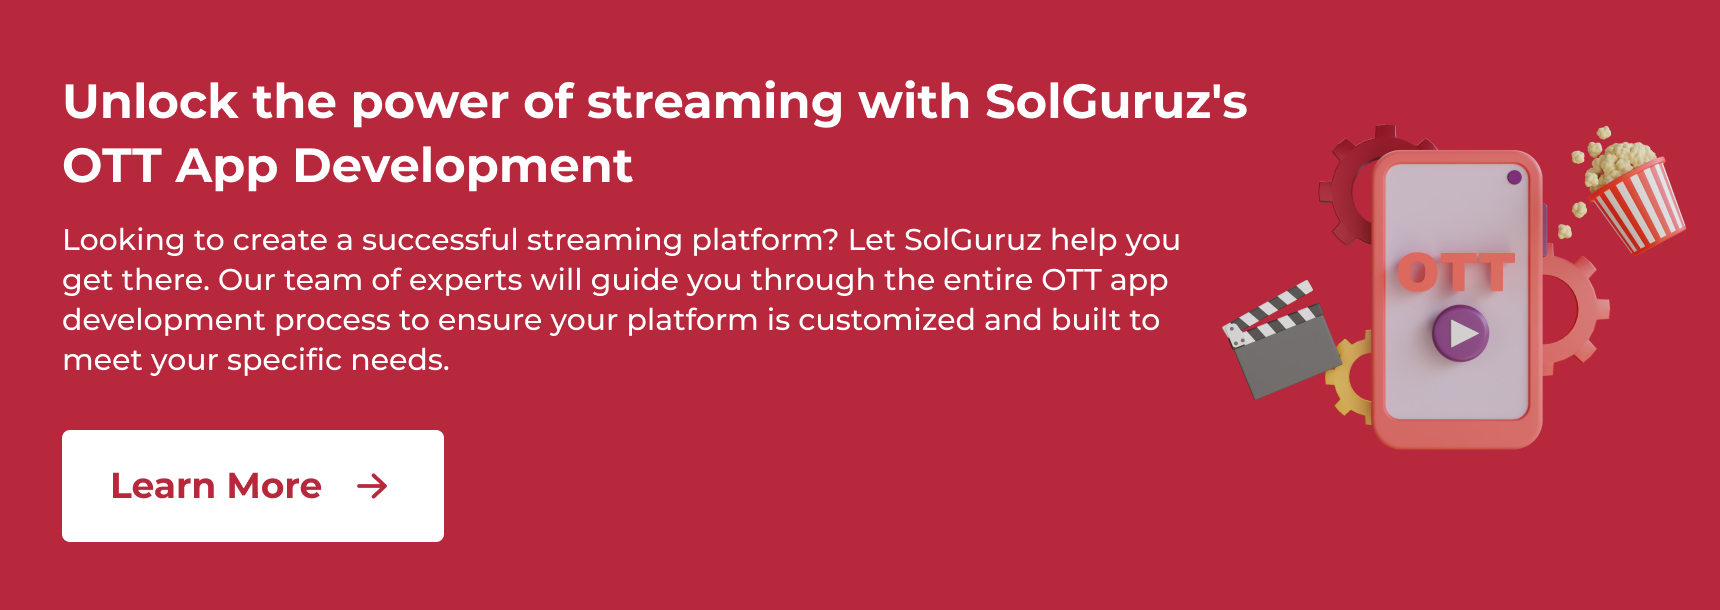 Unlock the power of streaming with SolGuruz's OTT App Development services